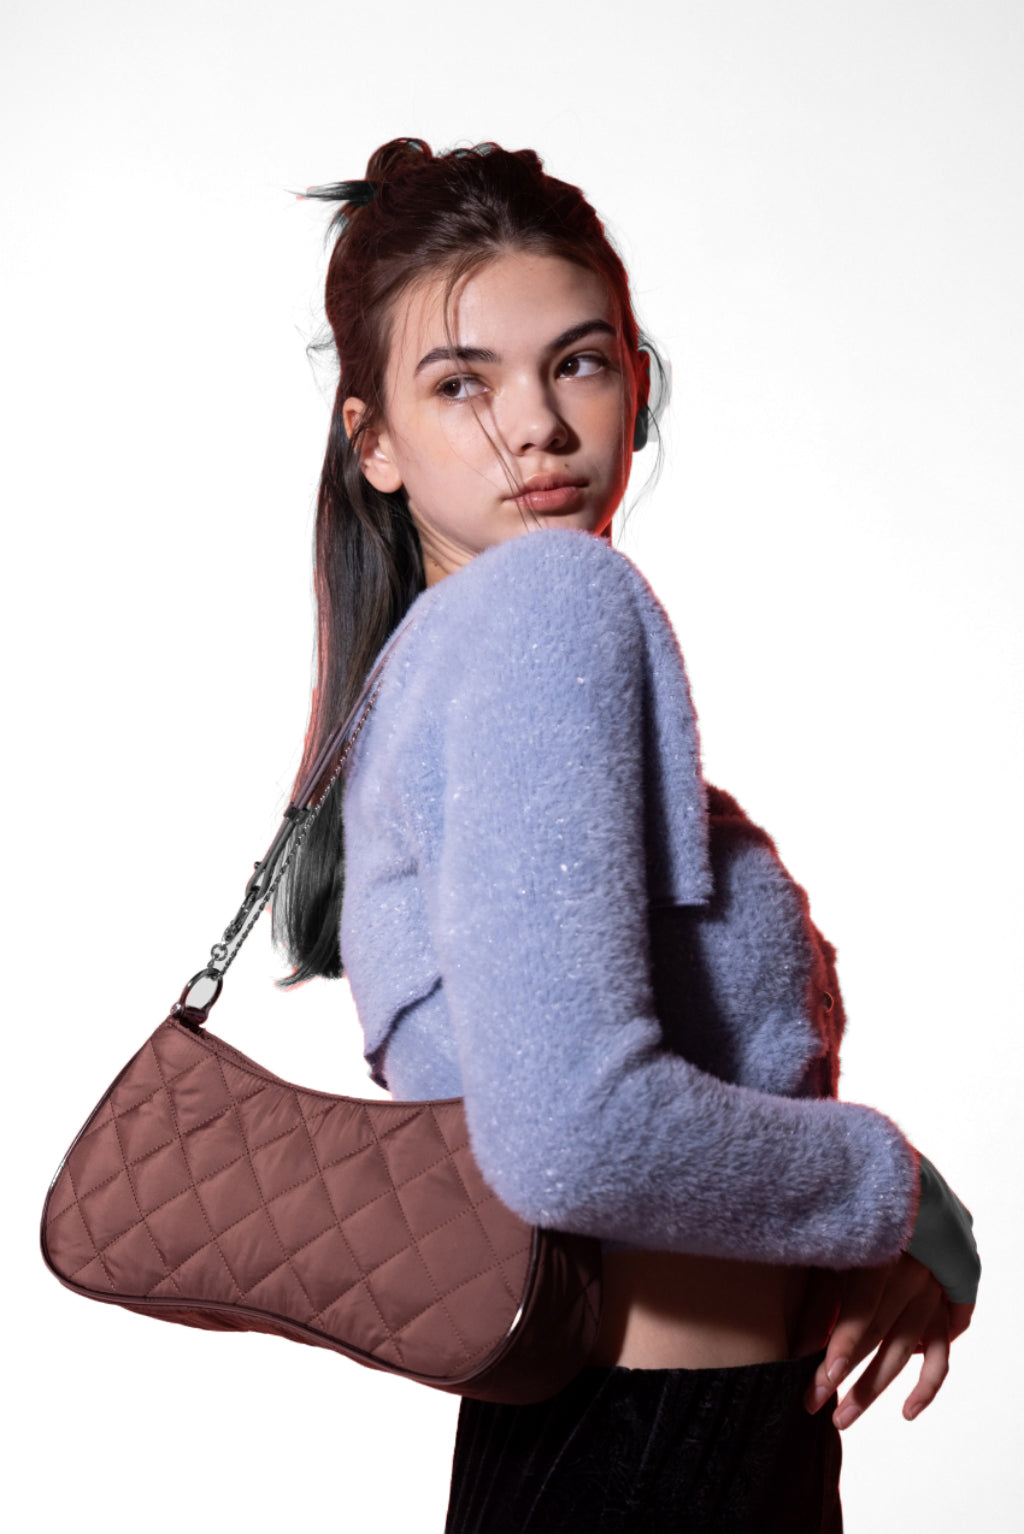 Chanel shoulder bag hi-res stock photography and images - Alamy